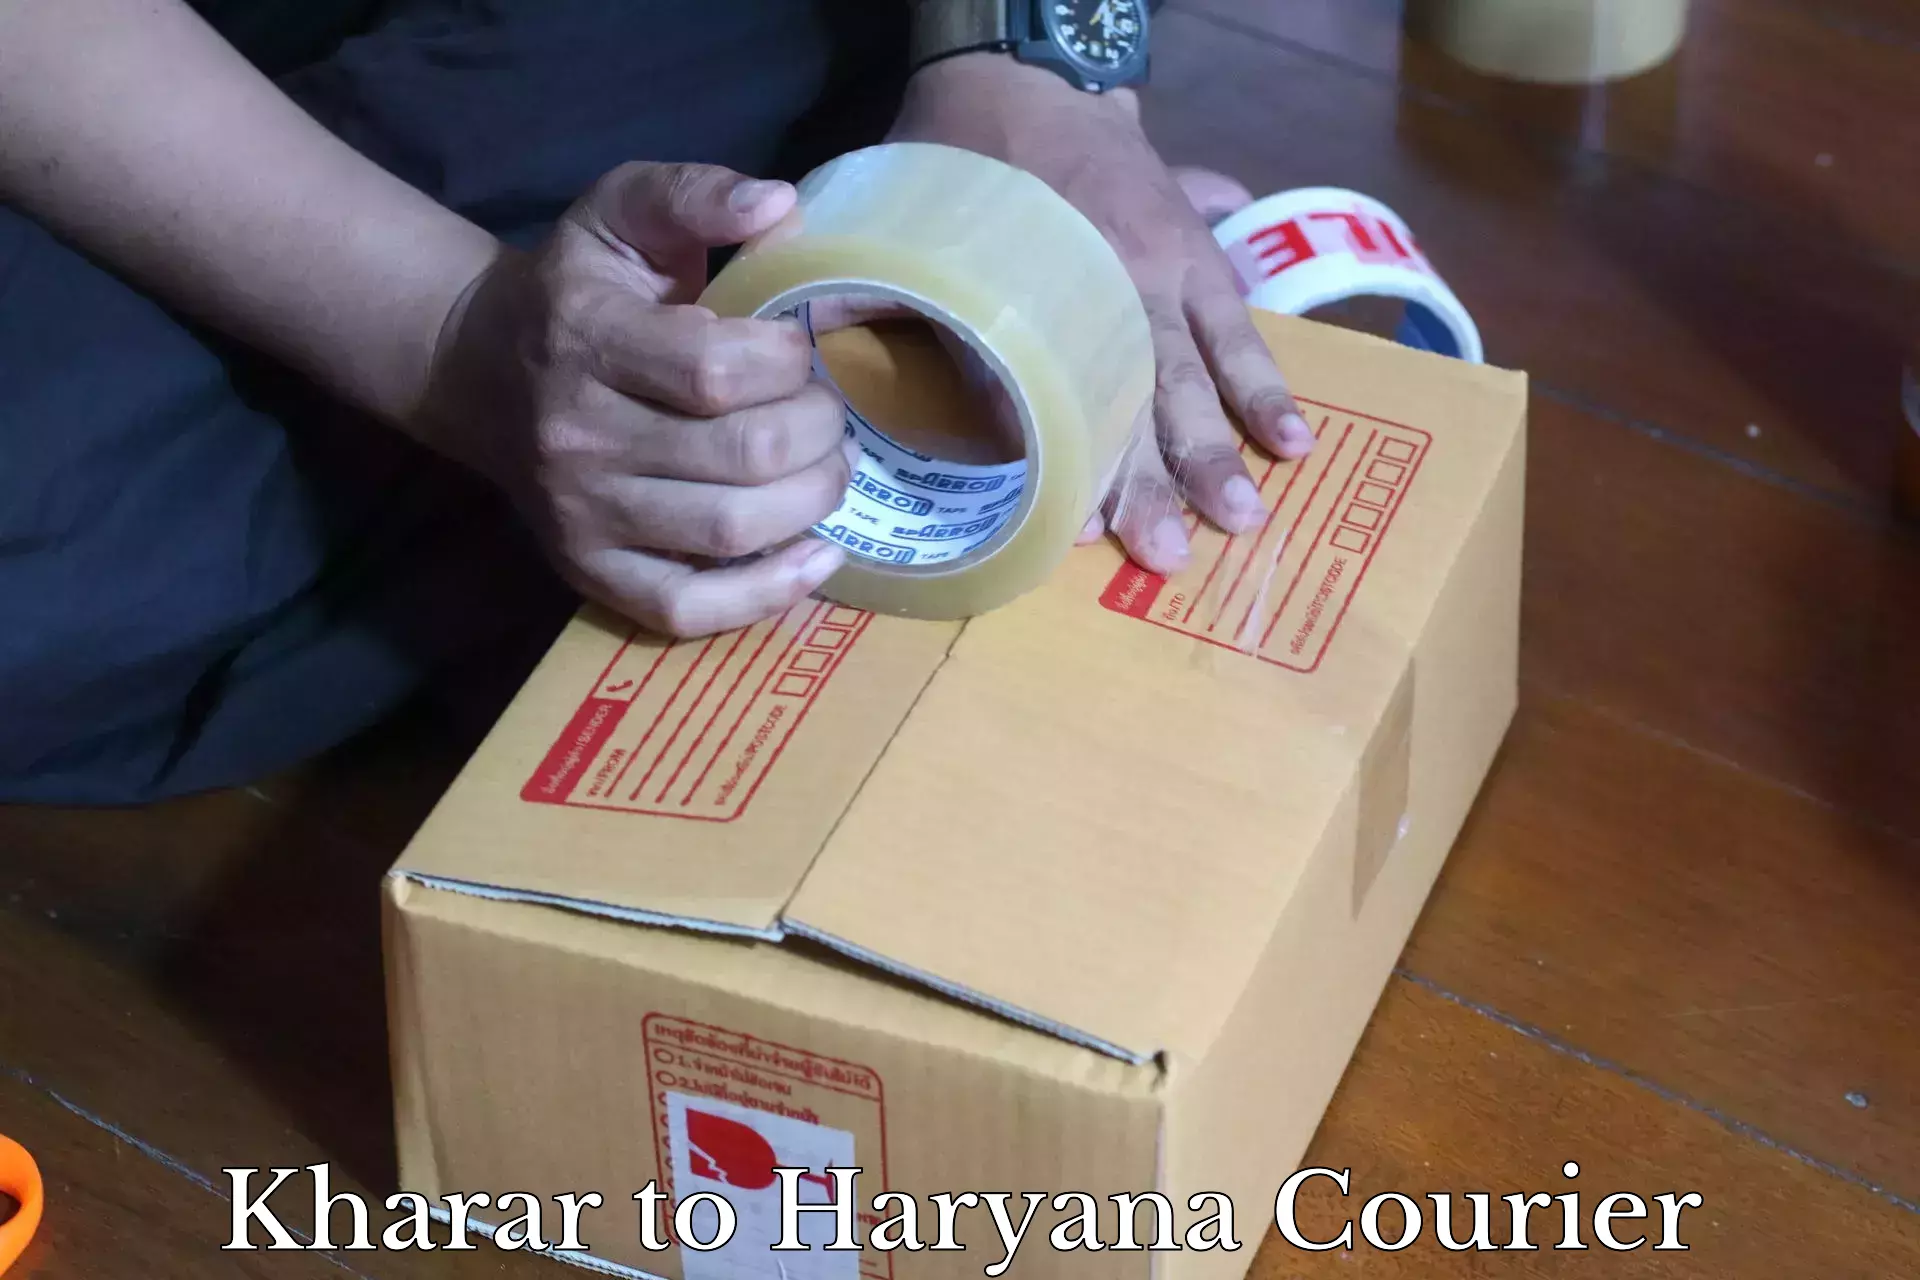 Affordable parcel service Kharar to Gurugram